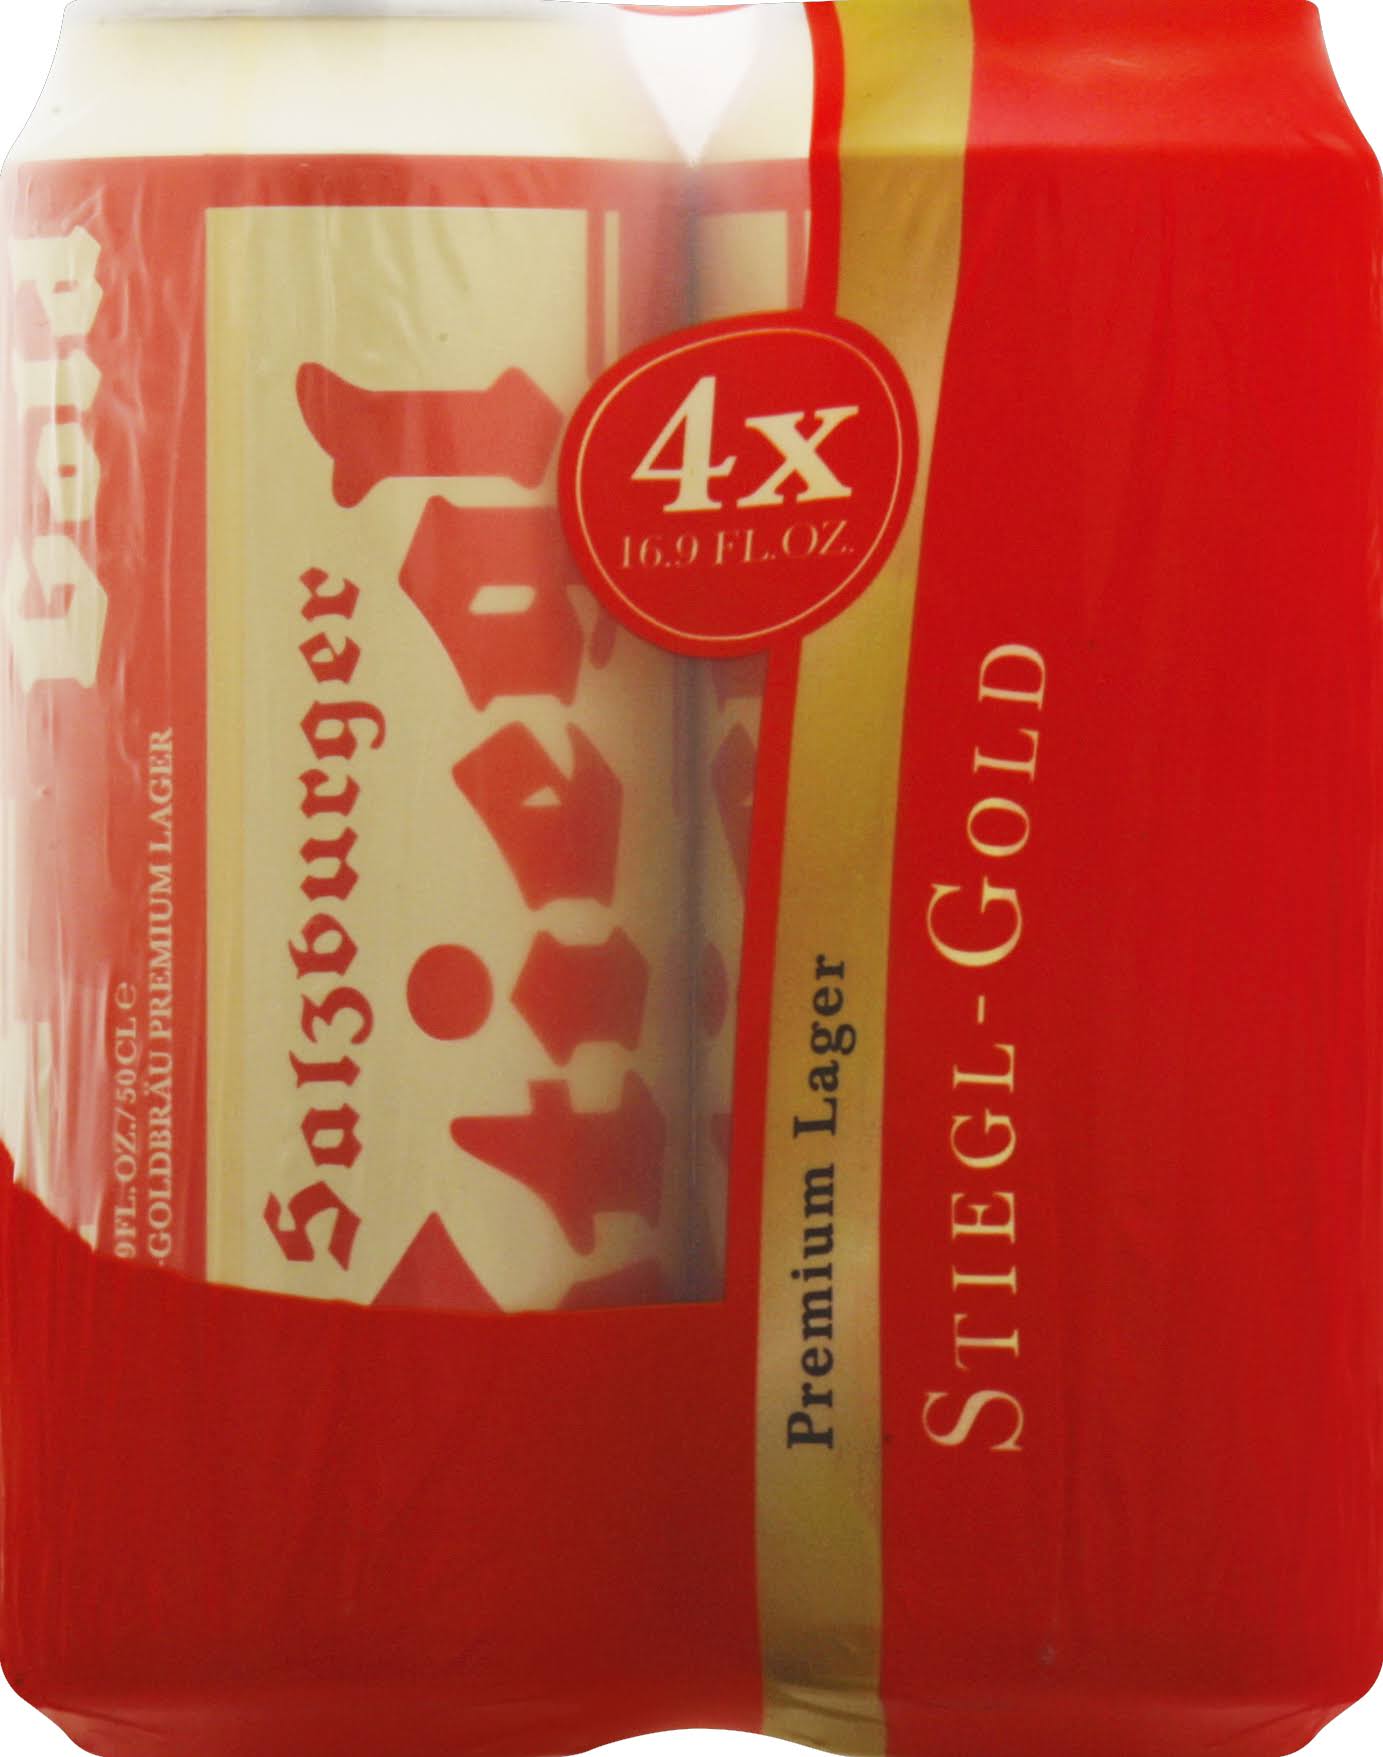 Stiegl-Goldbrau Beer, Premium Lager - 4 cans [16.9 fl oz]